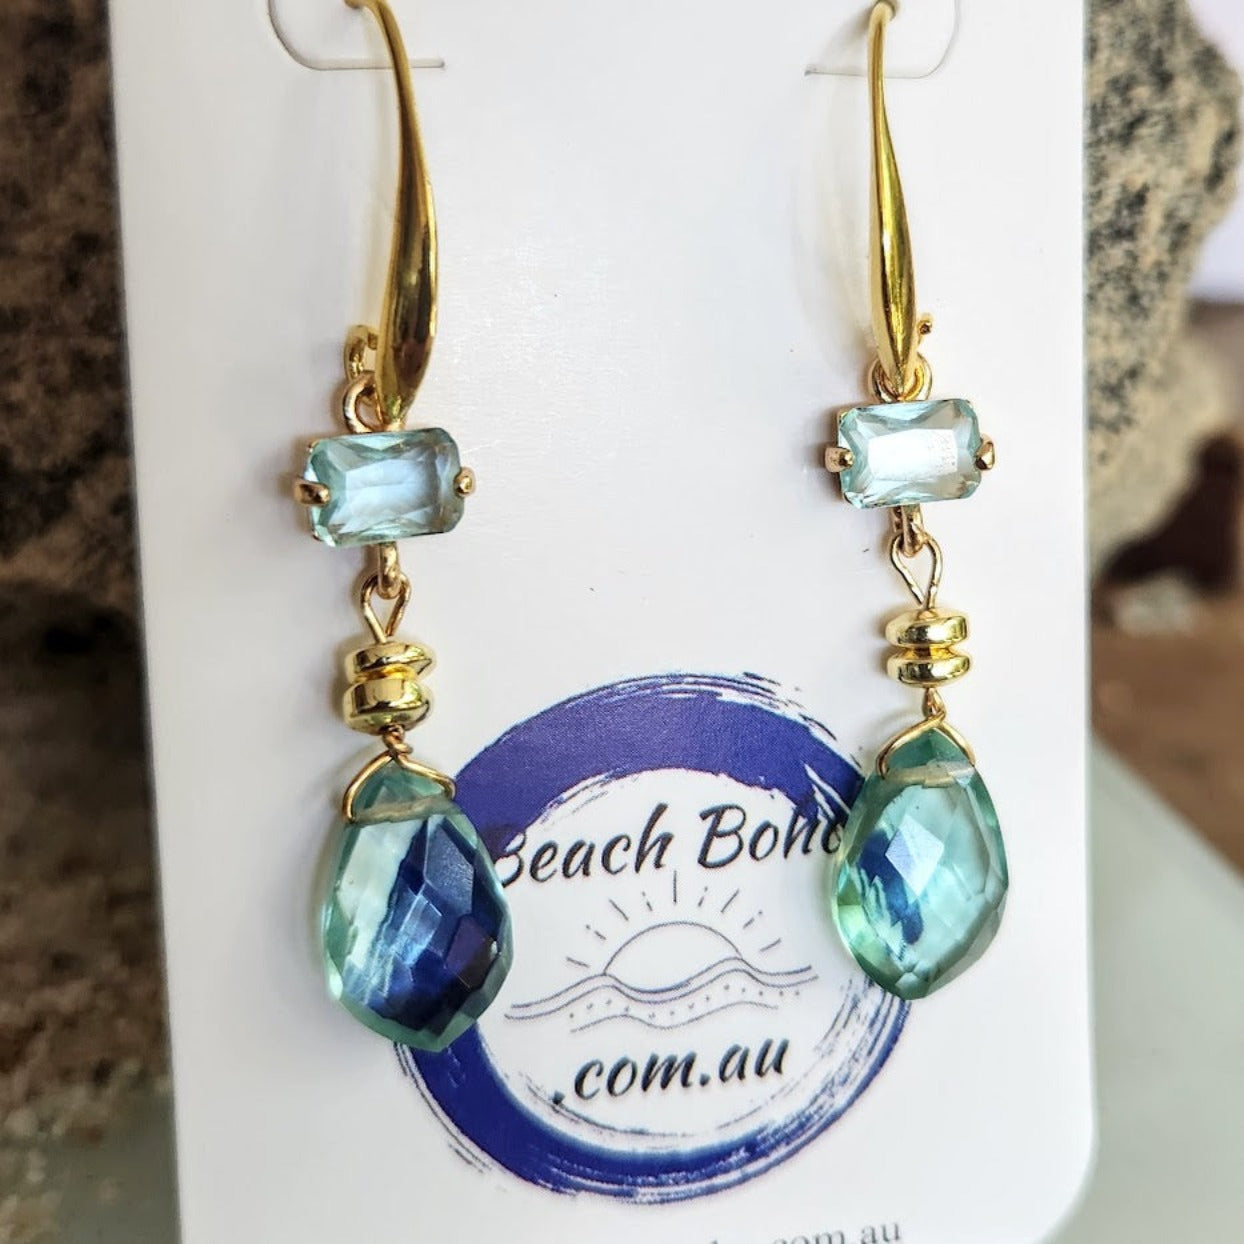 BLUE SEAS - AQUAMARINE GOLD HOOK BOHO DANGLES - Premium earrings from www.beachboho.com.au - Just $45! Shop now at www.beachboho.com.au